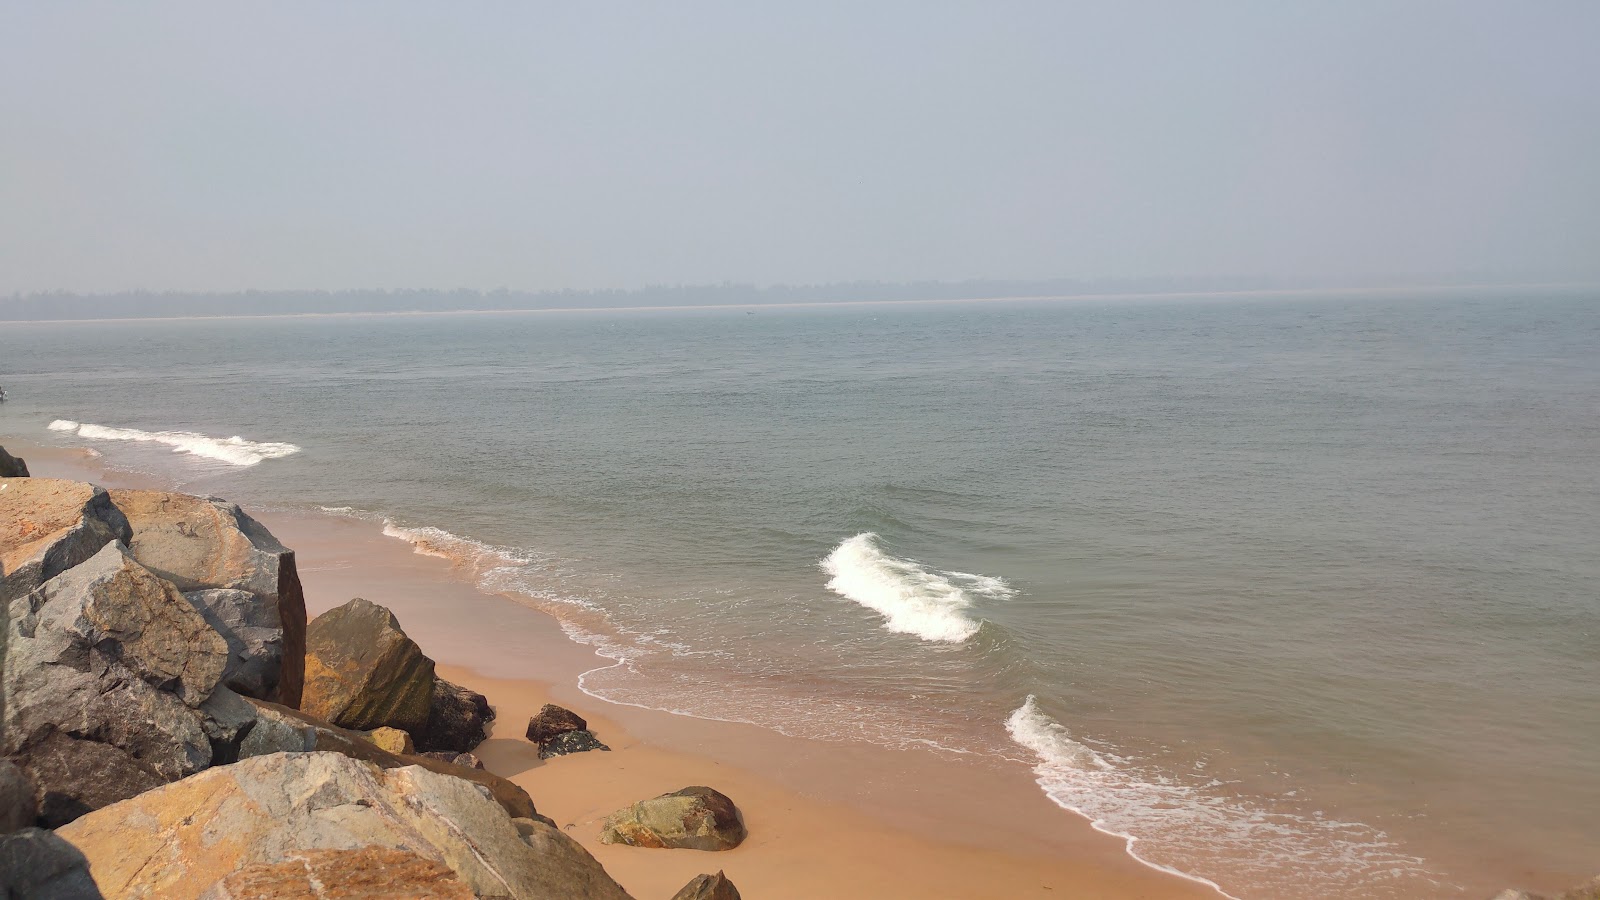 Fotografija Nehru Bangala Sea Beach priljubljeno mesto med poznavalci sprostitve